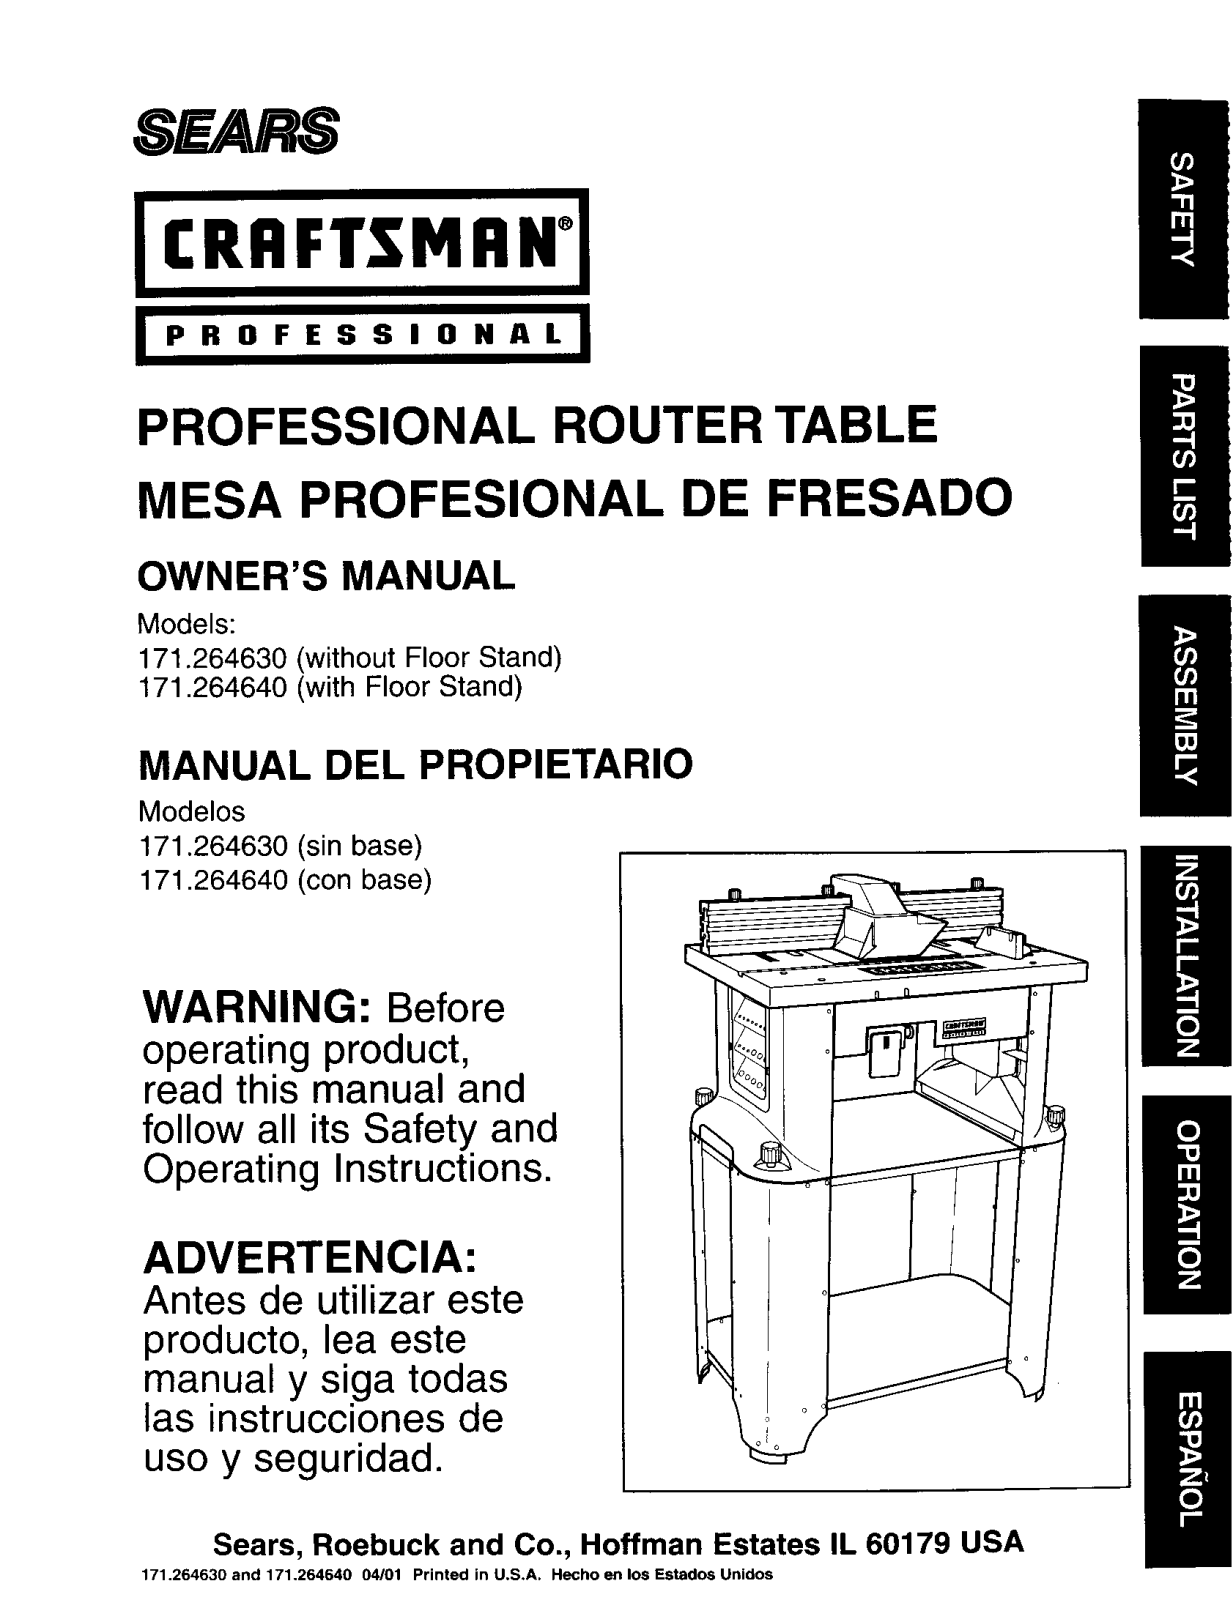 Craftsman 171264640, 171264630 Owner’s Manual